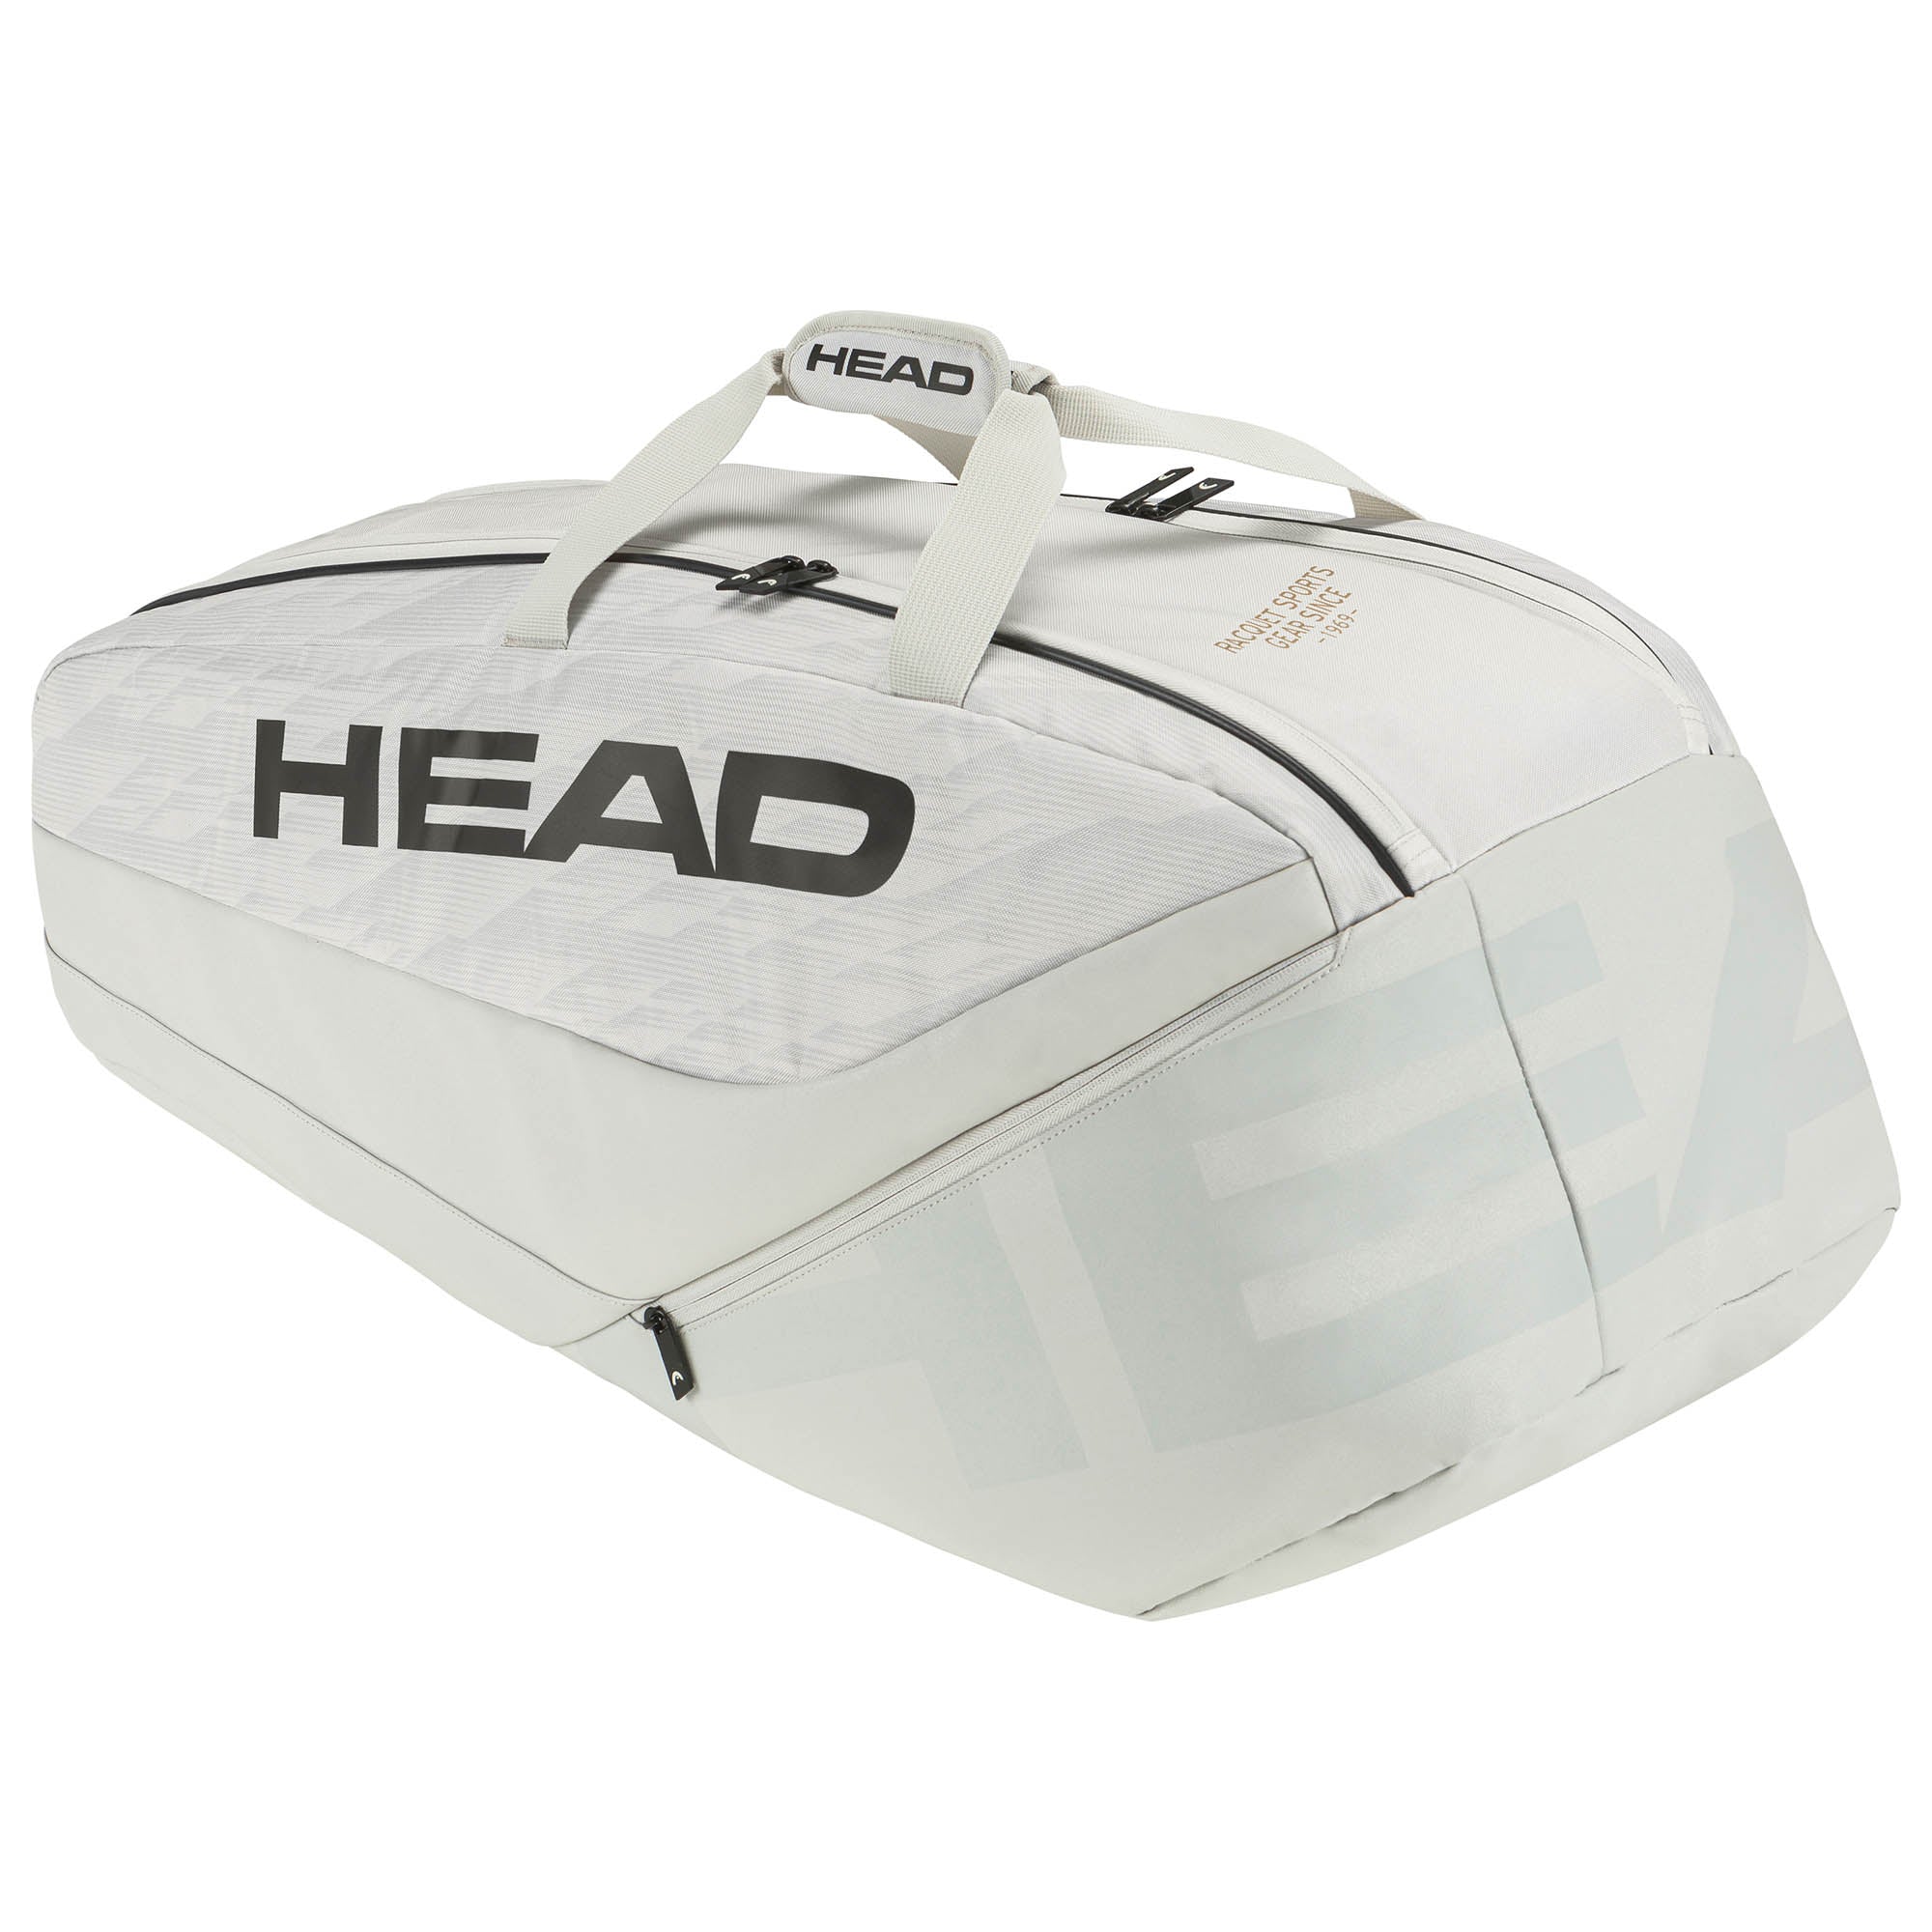 Head Pro X 9 Racket Tennis Bag